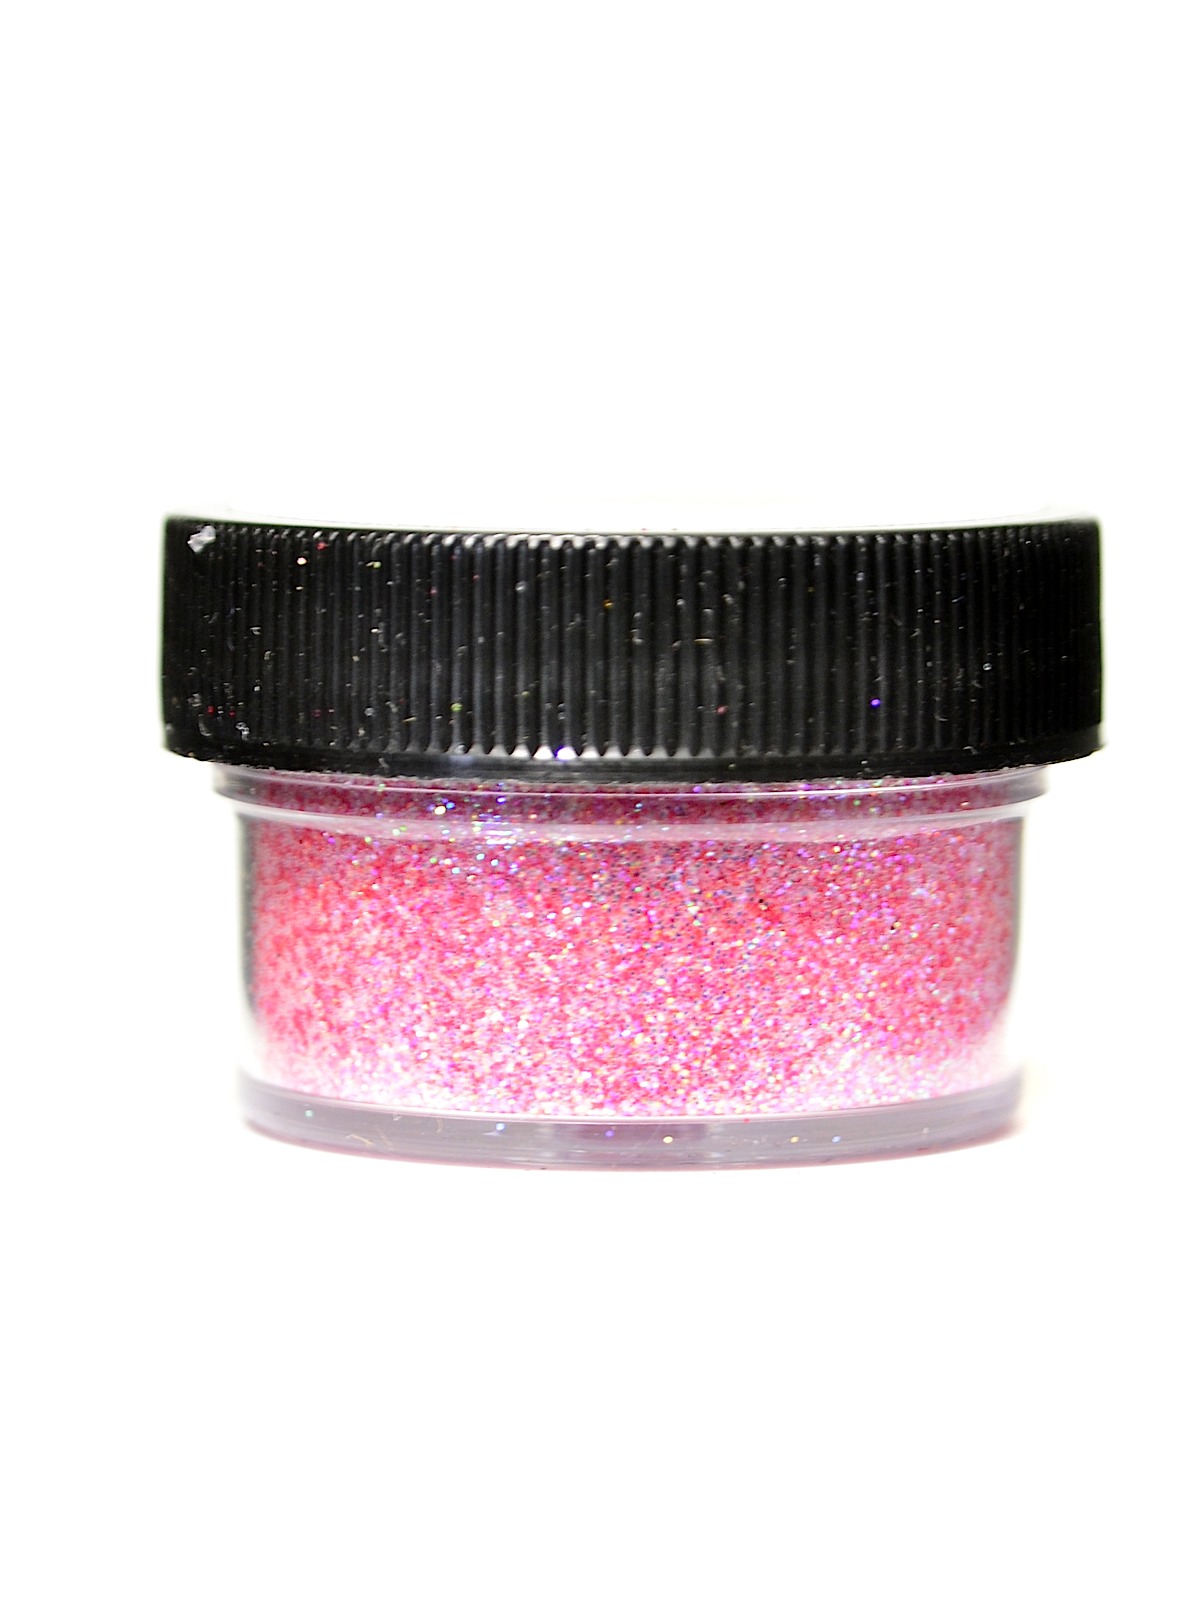 Ultrafine Transparent Glitter Miss Muffet 1 2 Oz. Jar